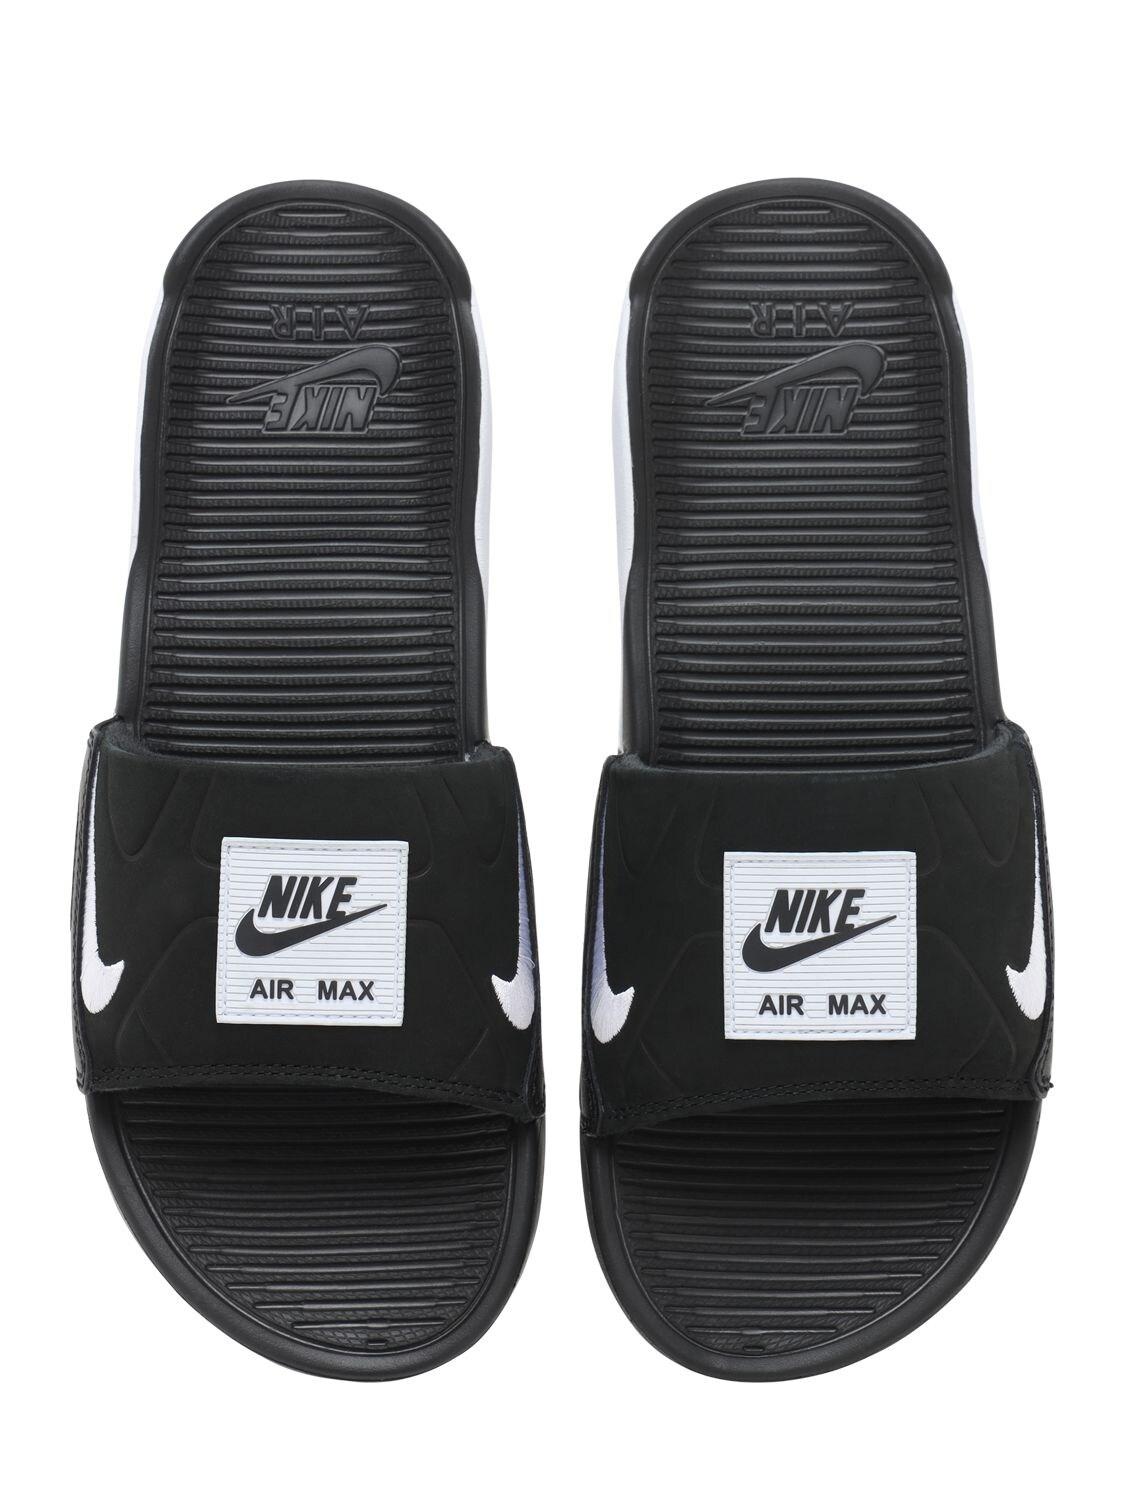 Nike Air Max 90 Slide in Black/White (Black) for Men - Save 53% - Lyst